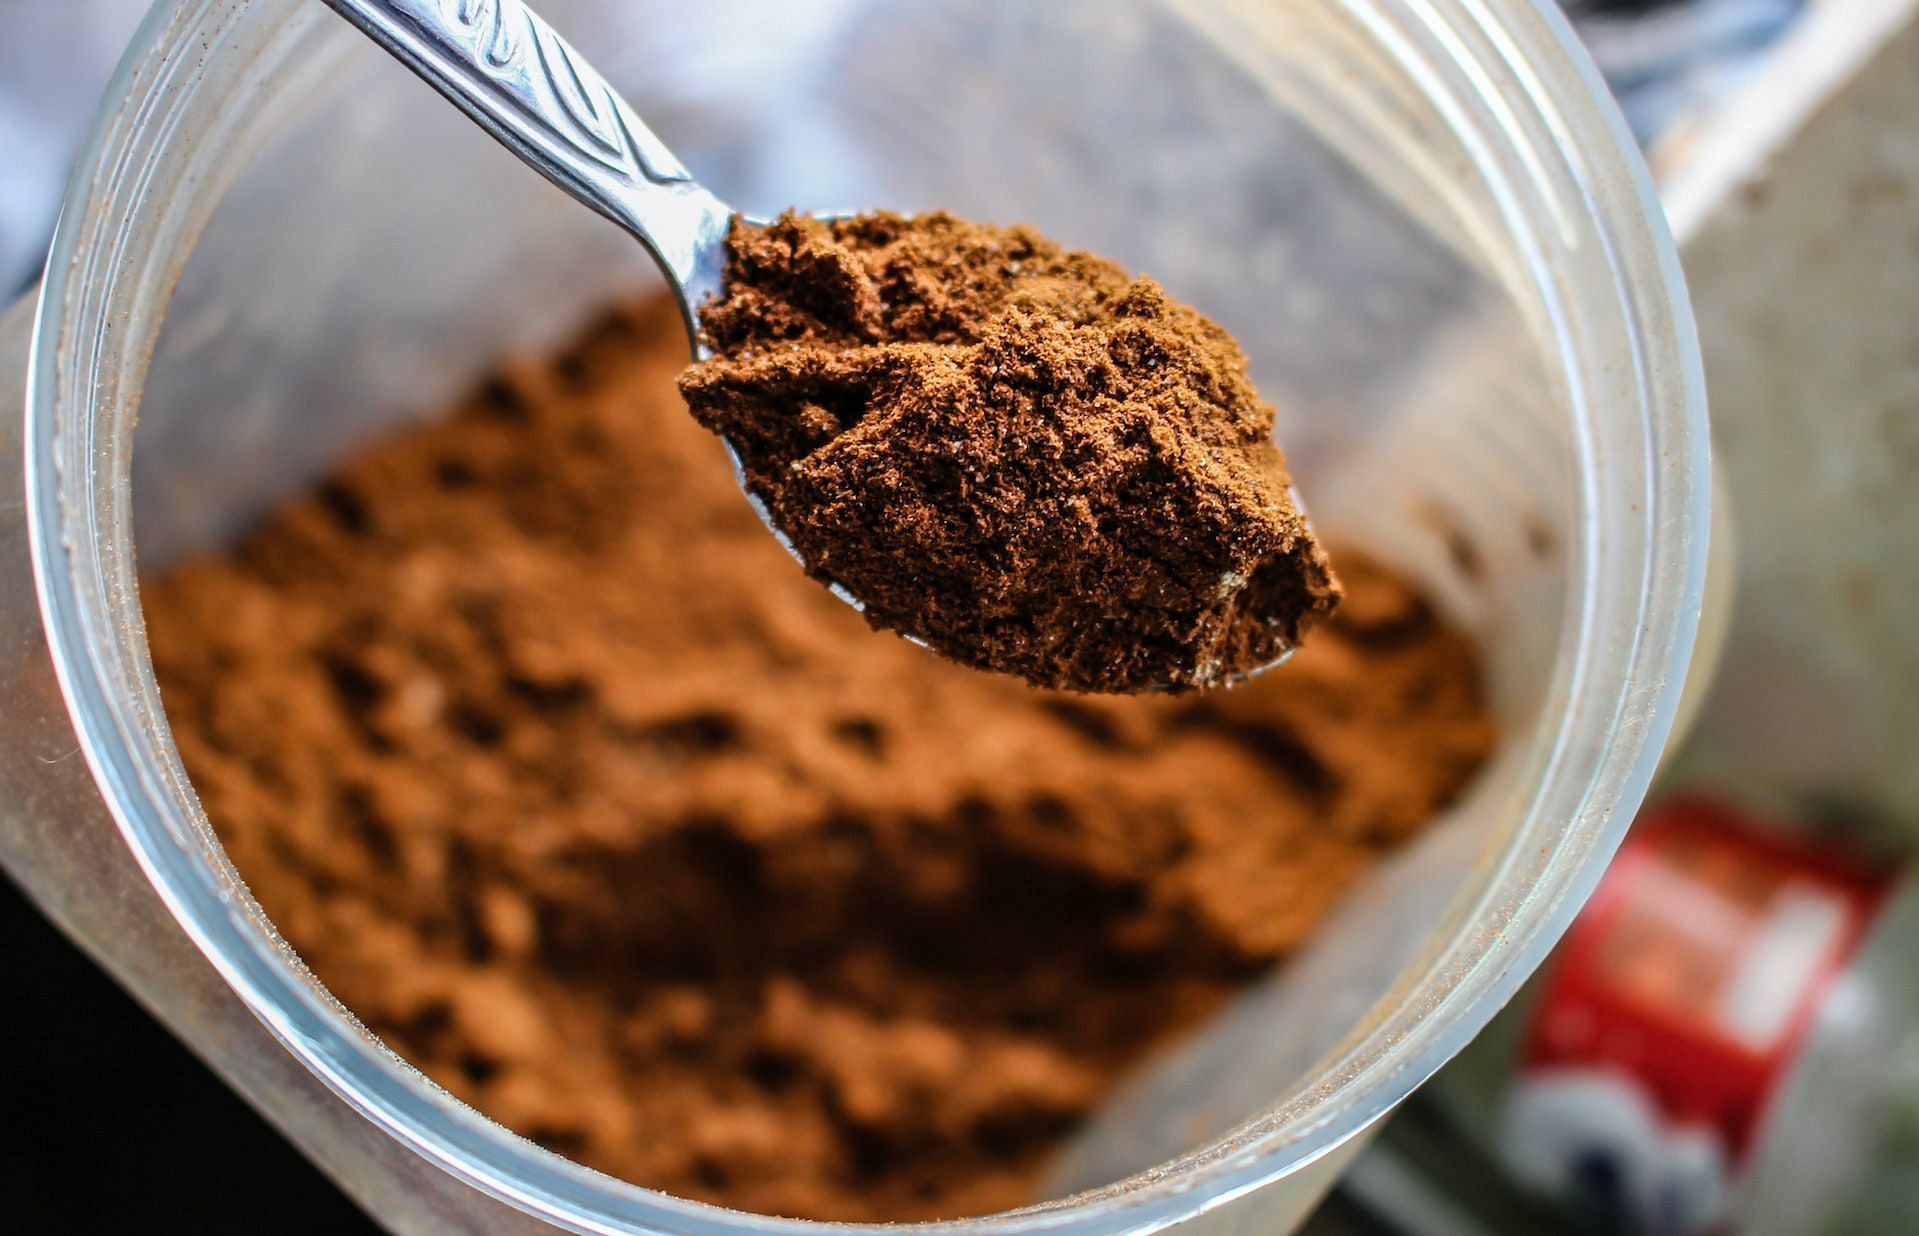 Cacao powder benefits include improving cholesterol levels. (Photo via Pexels/samer daboul)